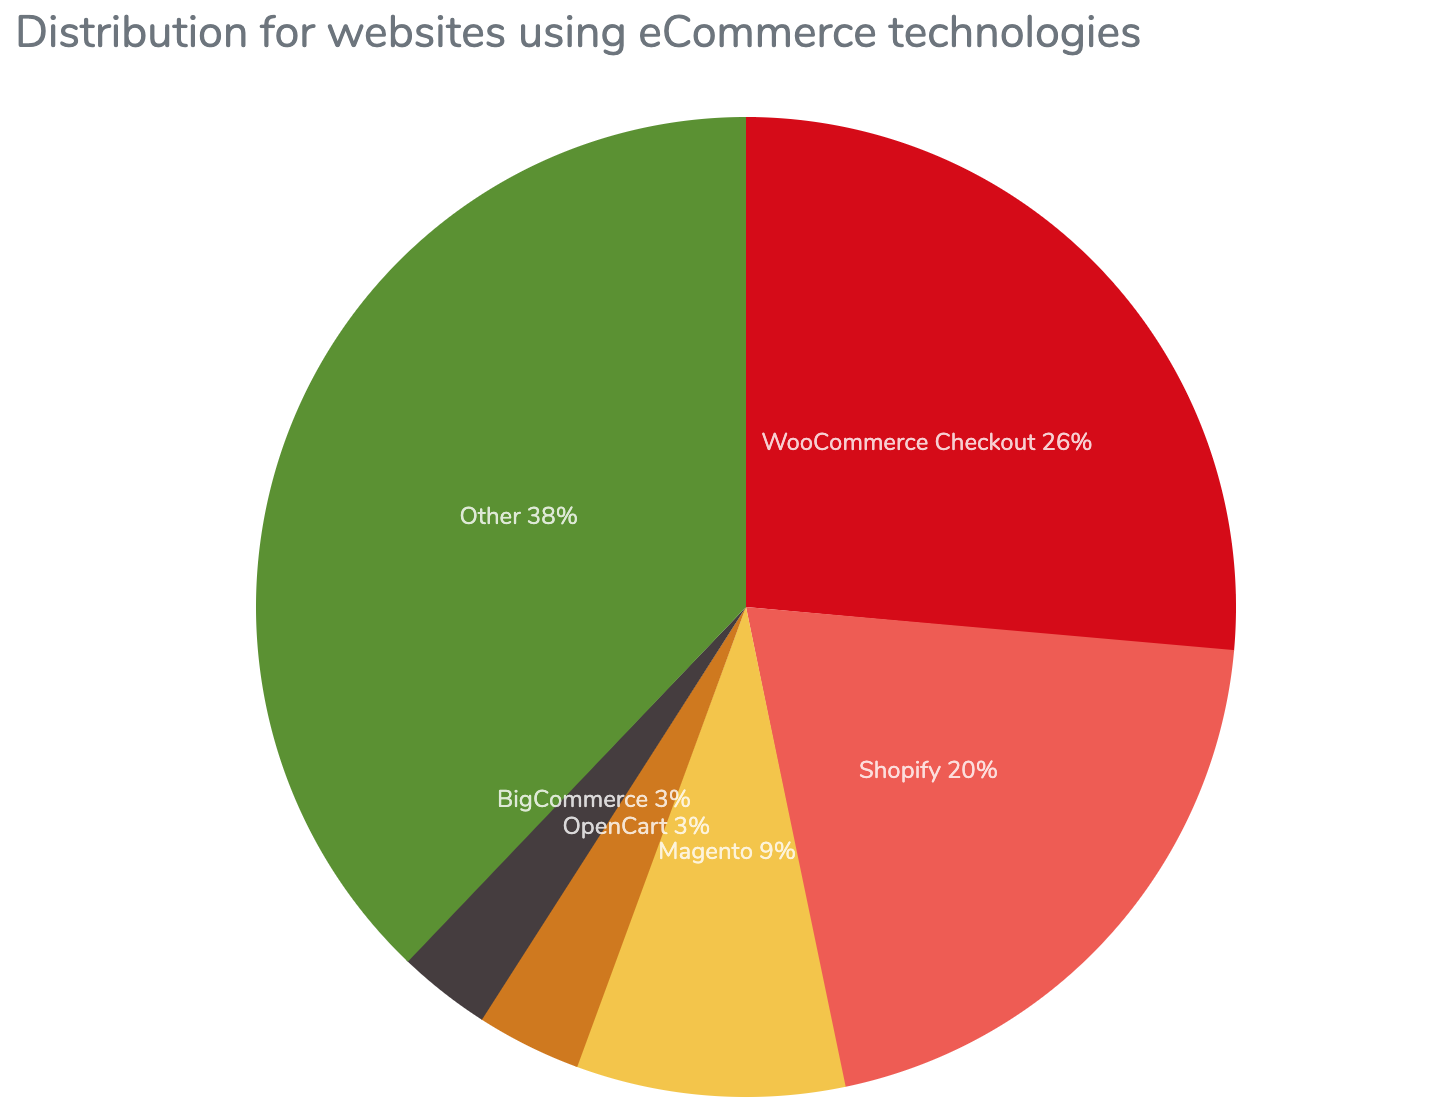 eCommerce Usage Distribution